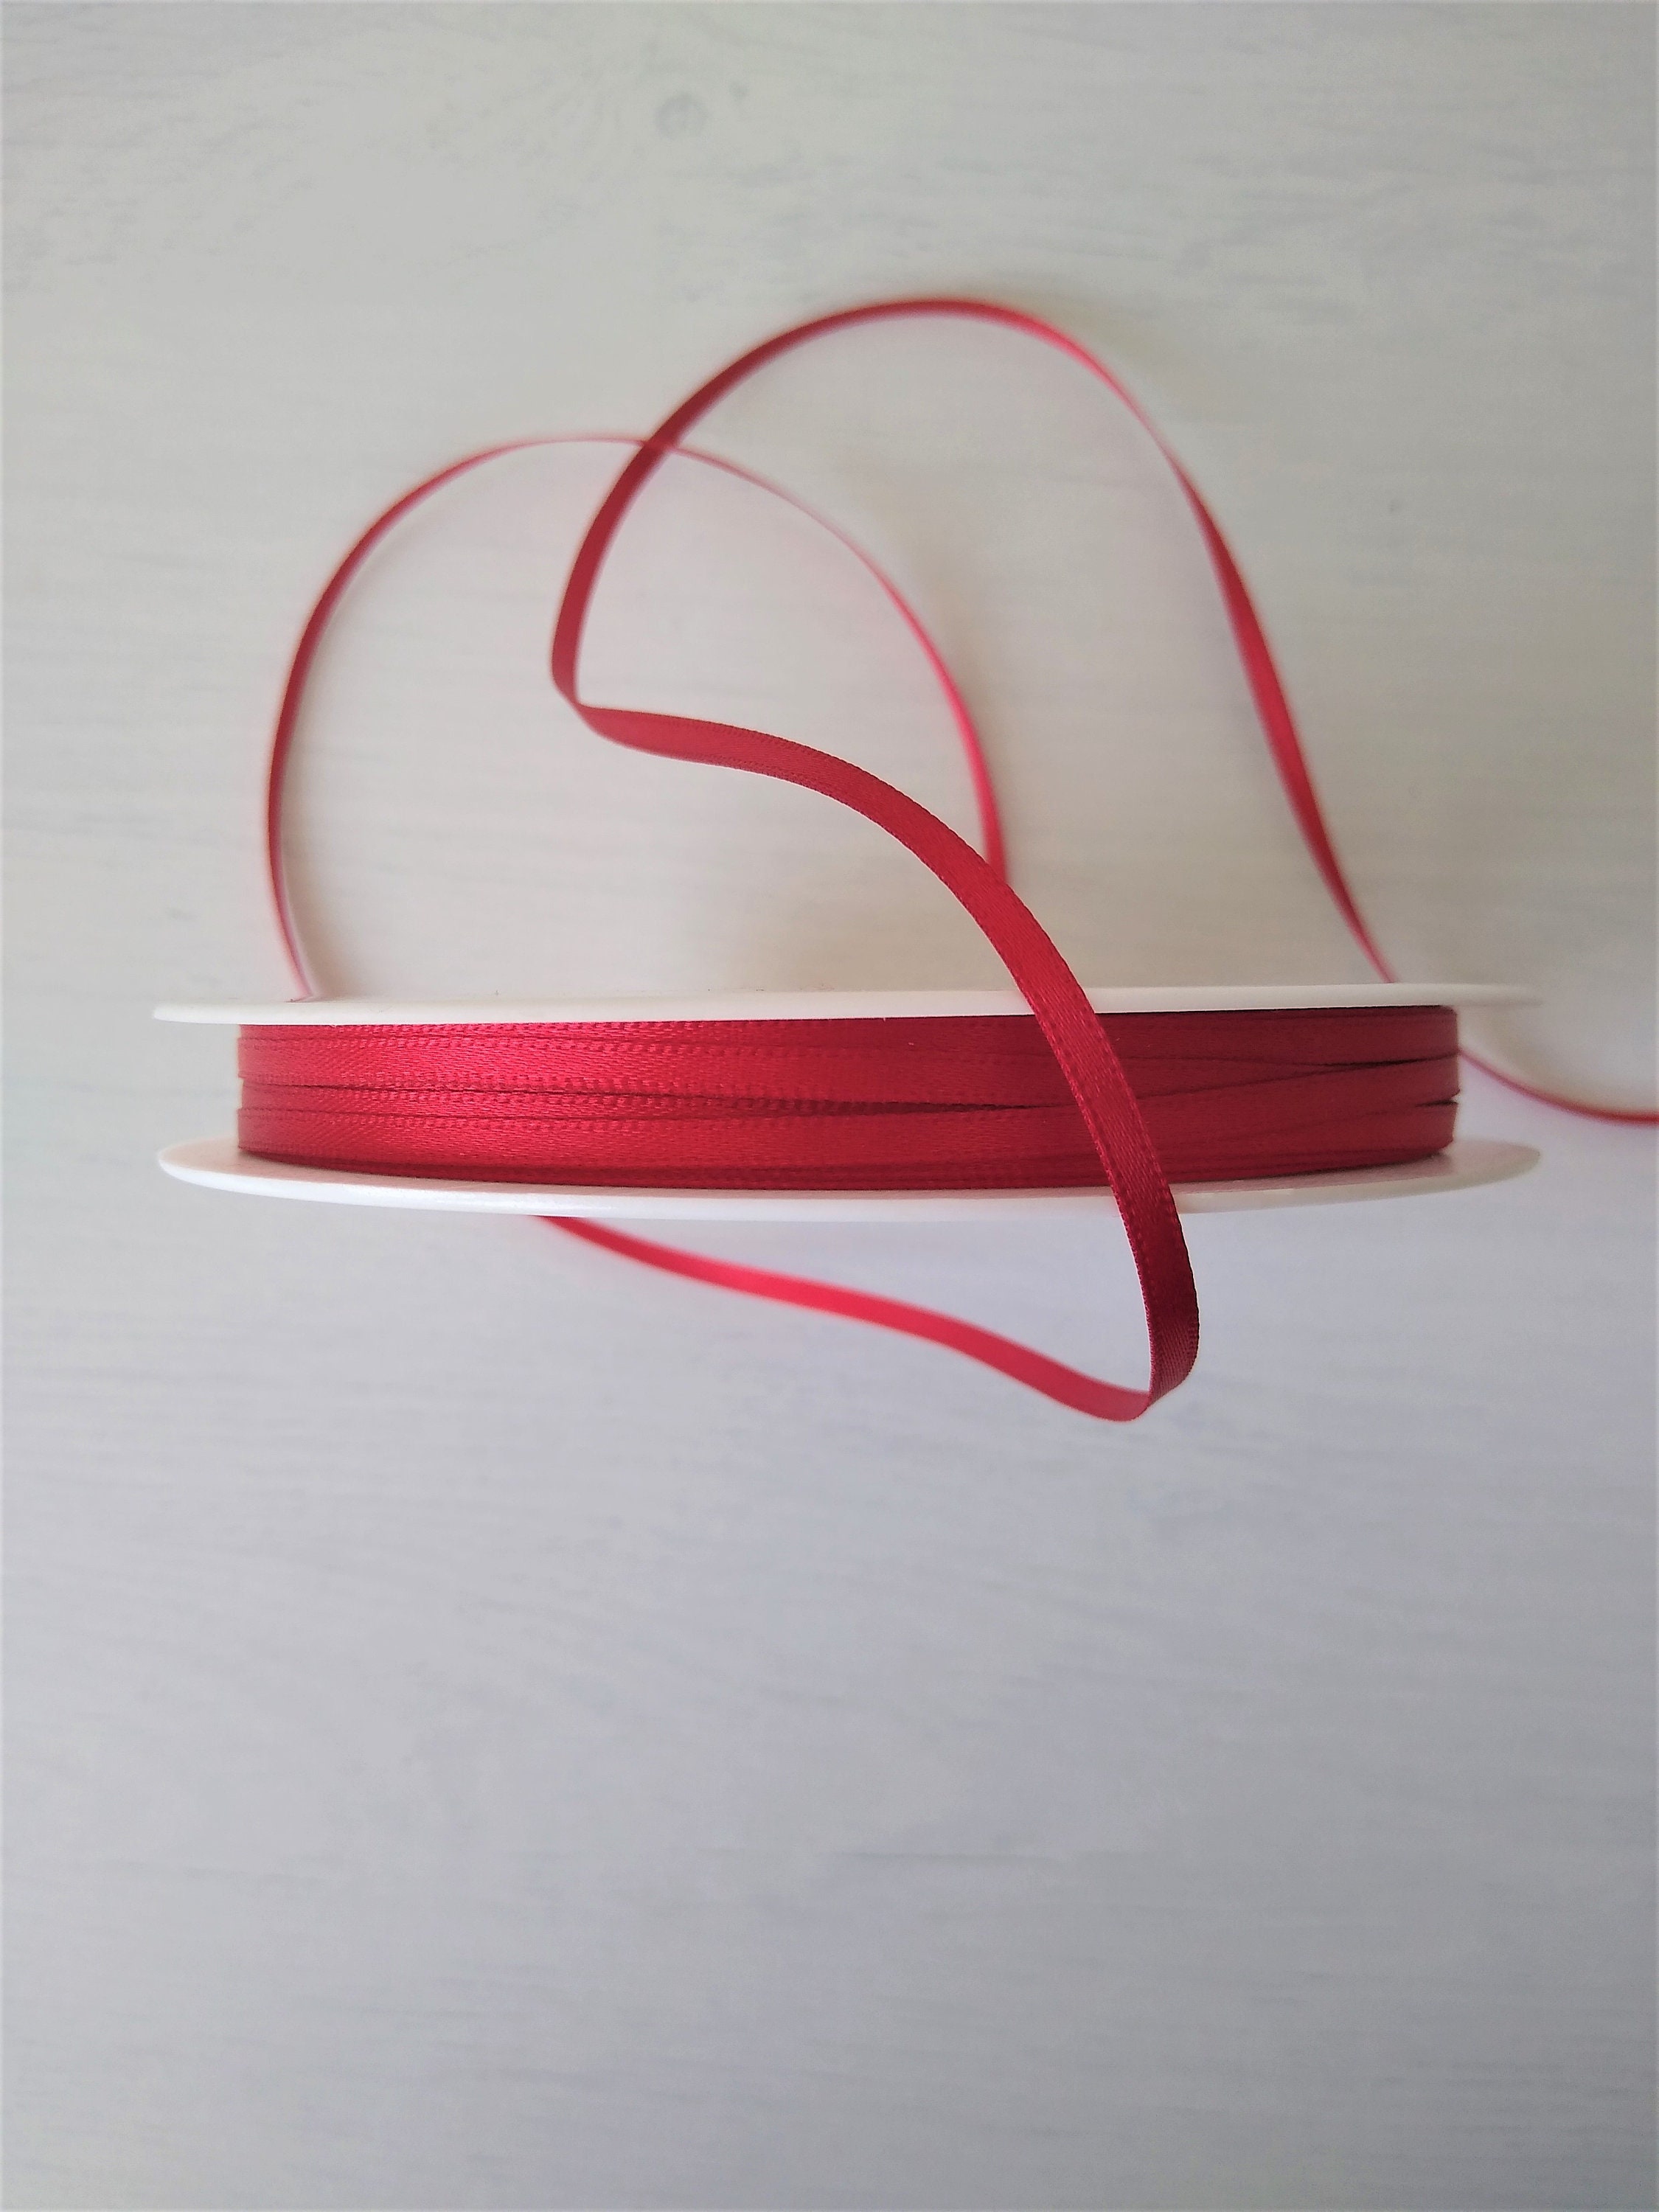 Cinta roja satinada de 3 mm, cinta shindo delgada de 3 mm, cinta